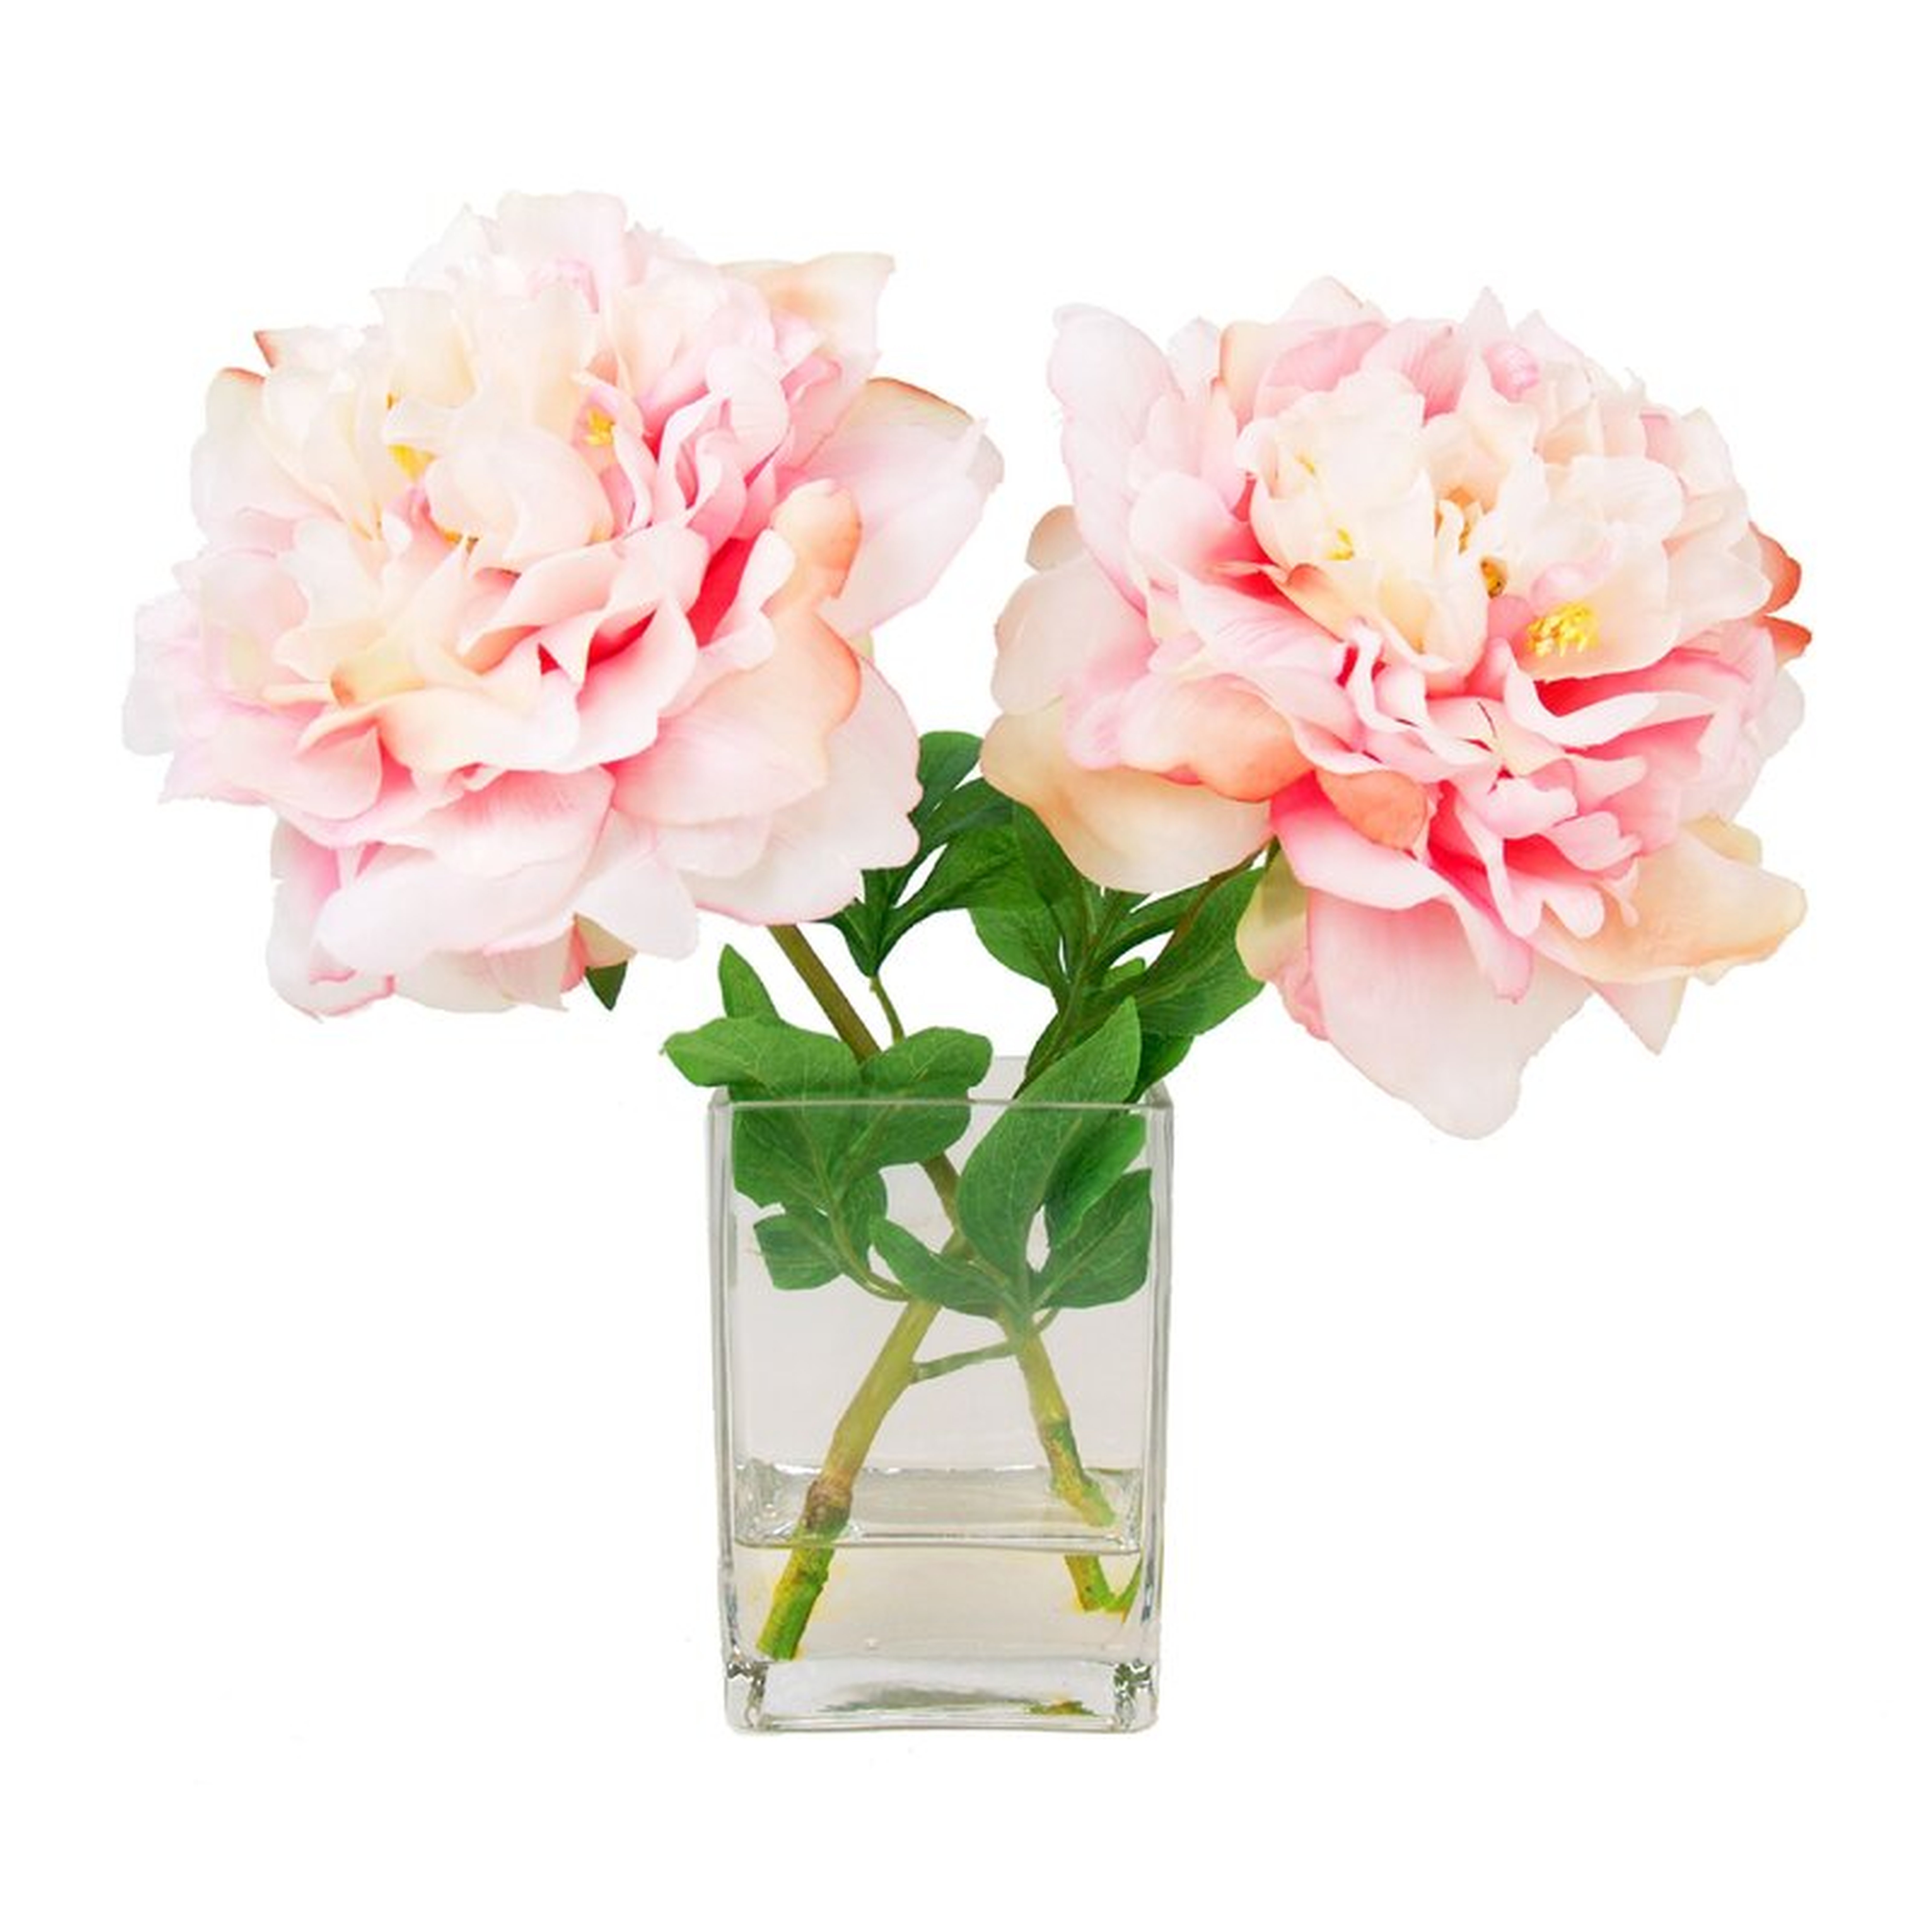 Faux Peony Floral Arrangement in Vase - Perigold